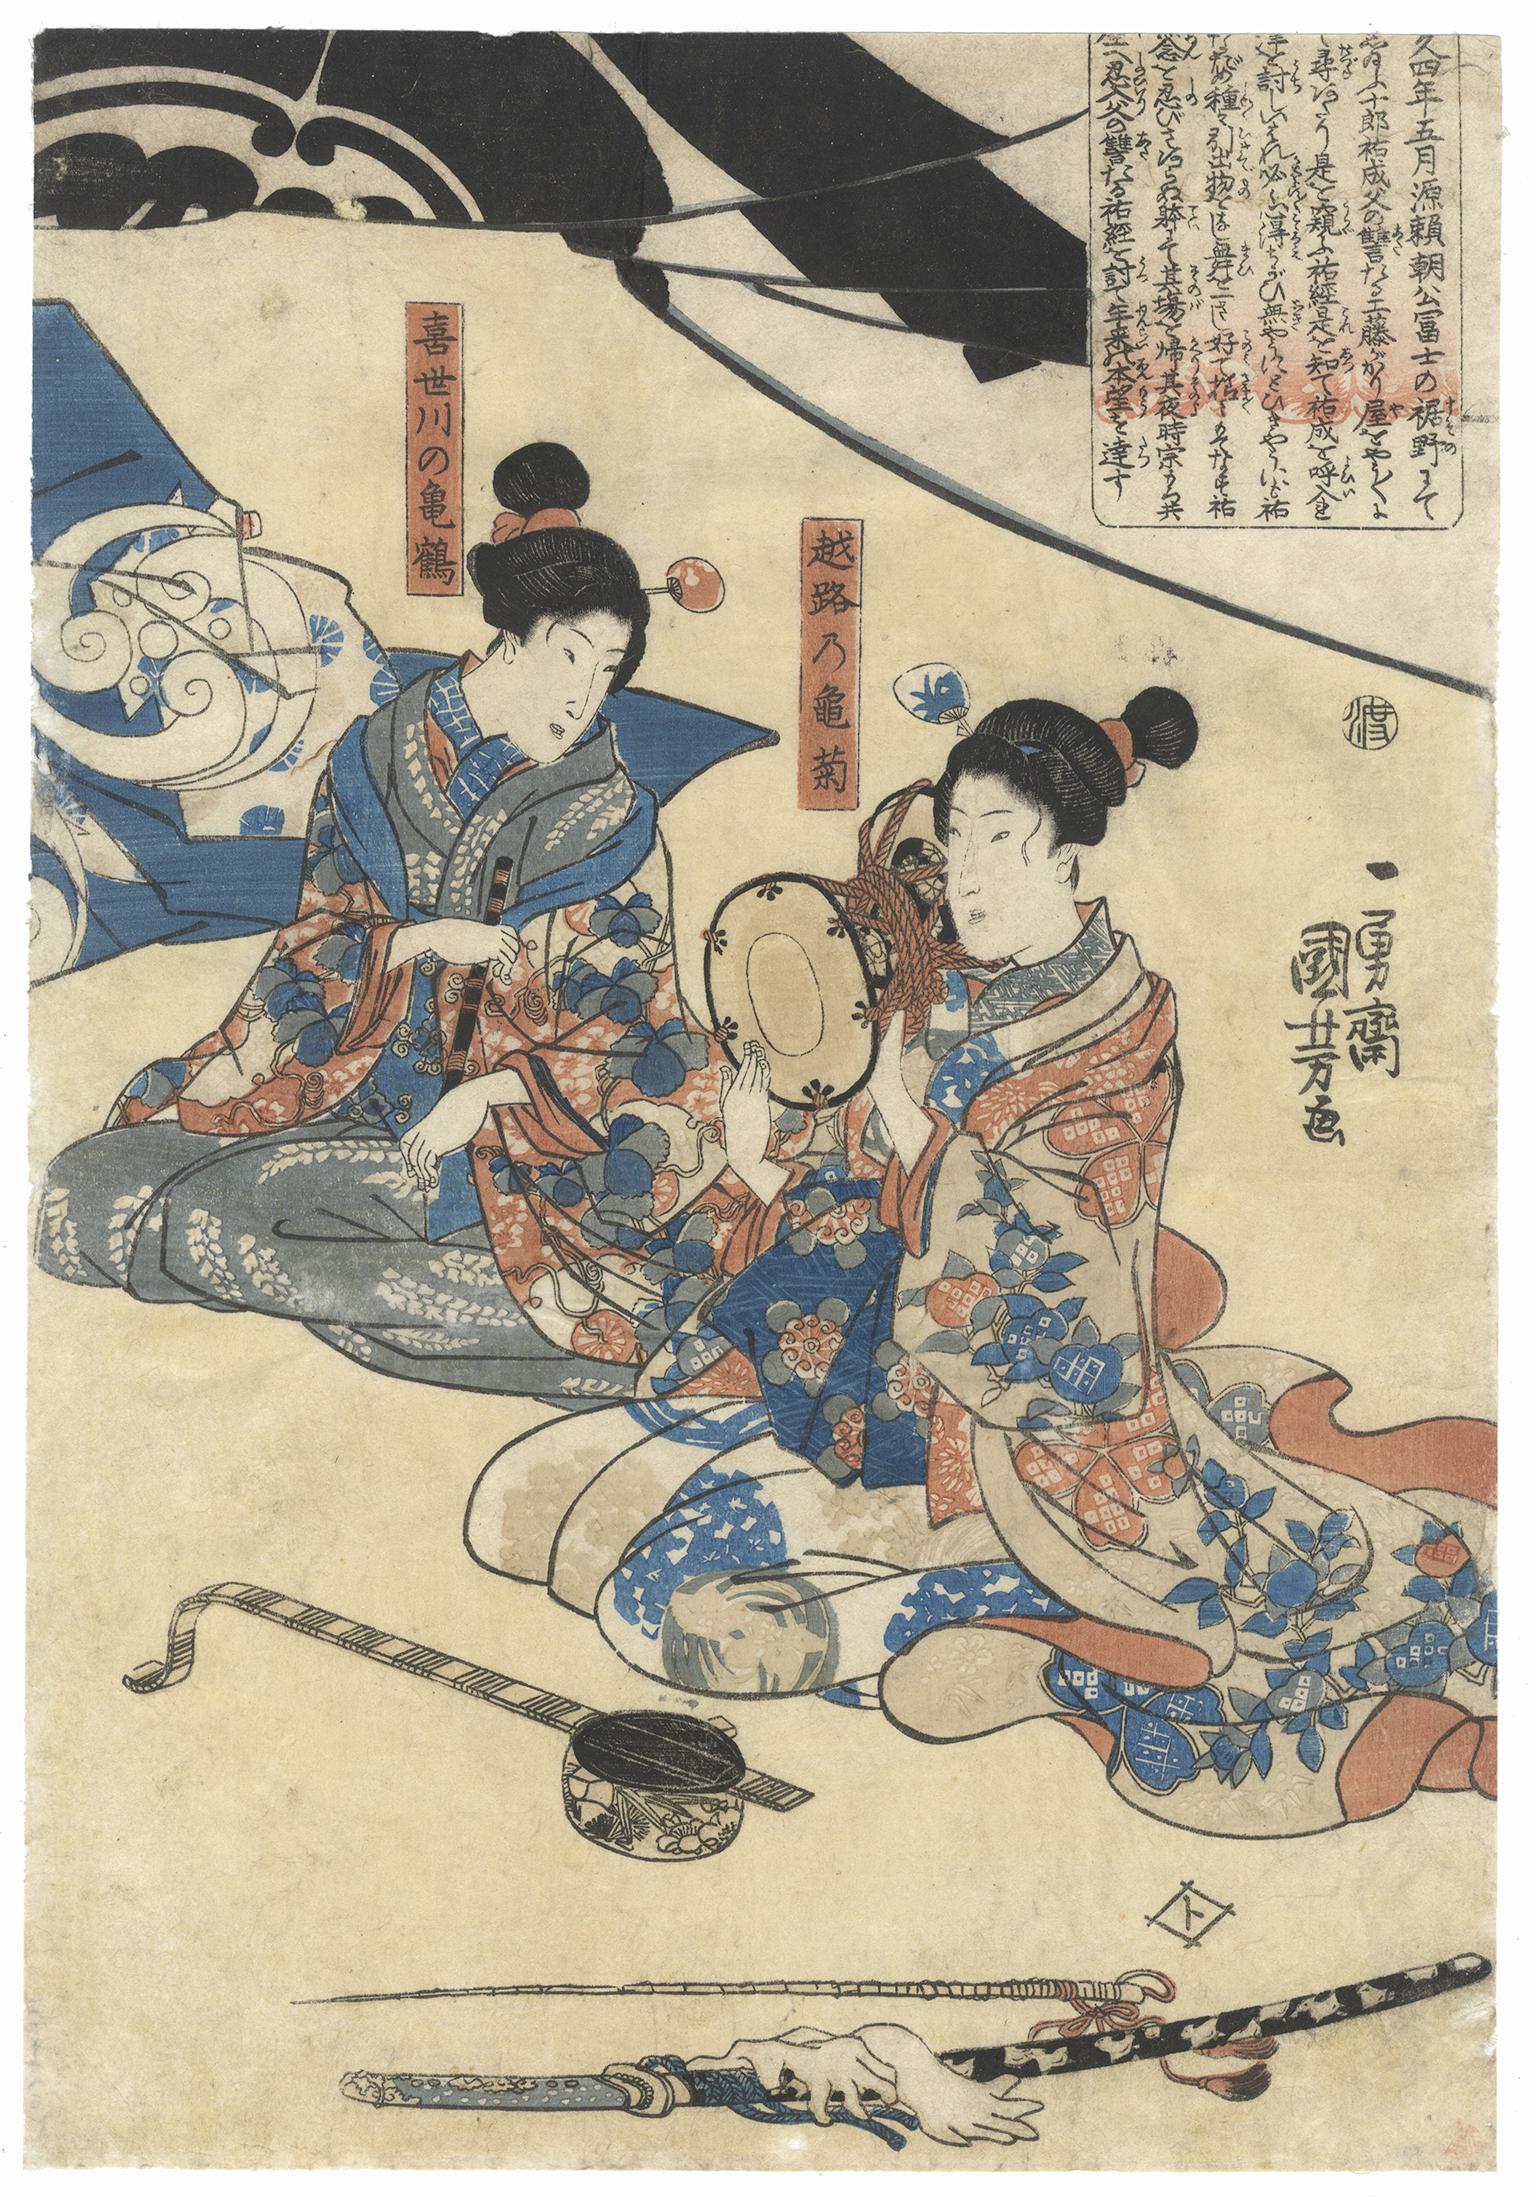 Artist: Kuniyoshi Utagawa (1798-1861)
Title: Soga Juro Sukenari Prepares to Take Revenge on Kudo Suketsune
Publisher: Yamaguchiya Tobei
Date: c. 1843-1846
Dimensions: (L) 24.5 x 35 (C) 24.8 x 35 (R) 24.2 x 35 cm
Condition: Trimmed. Some small holes.